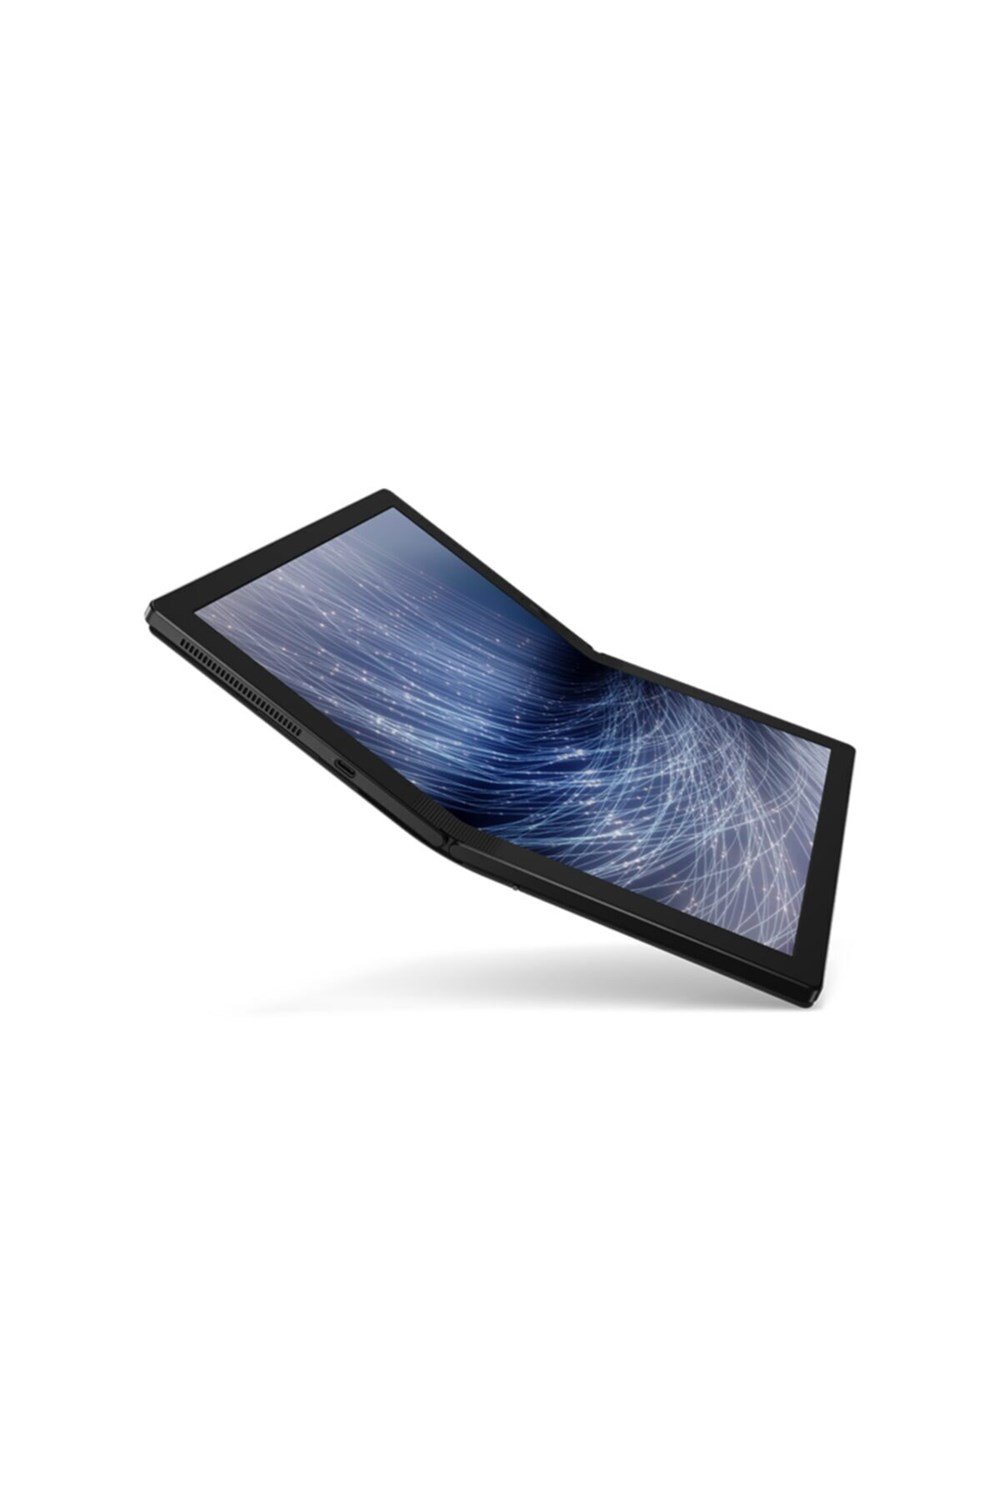 LENOVO Thinkpad X1 Fold G1 I5 8gb 1tb Katlanan Ekranlı Hem Laptop Hem  Tablet Win 10